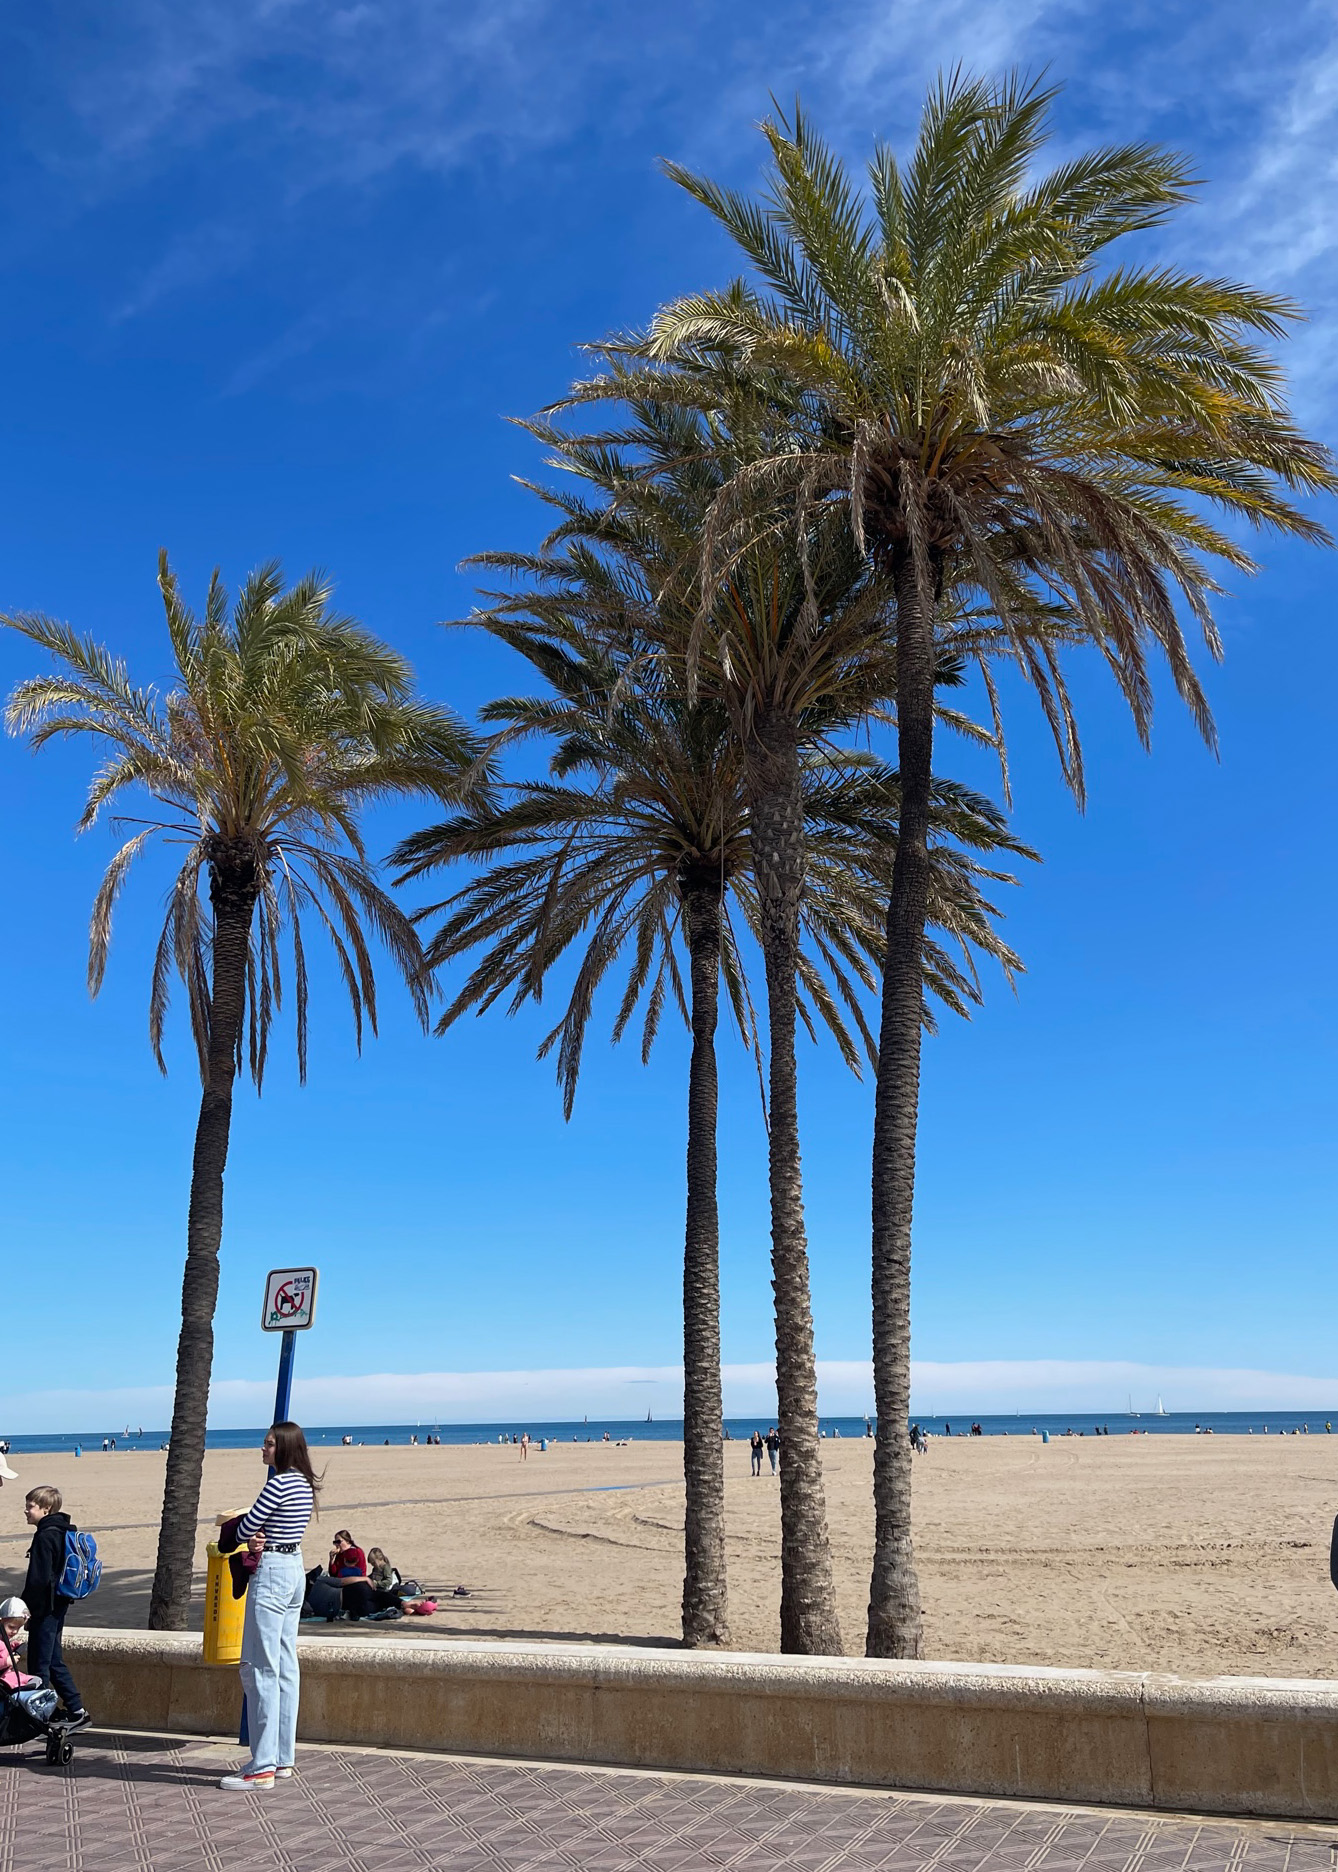 Palm trees at the beach promenade